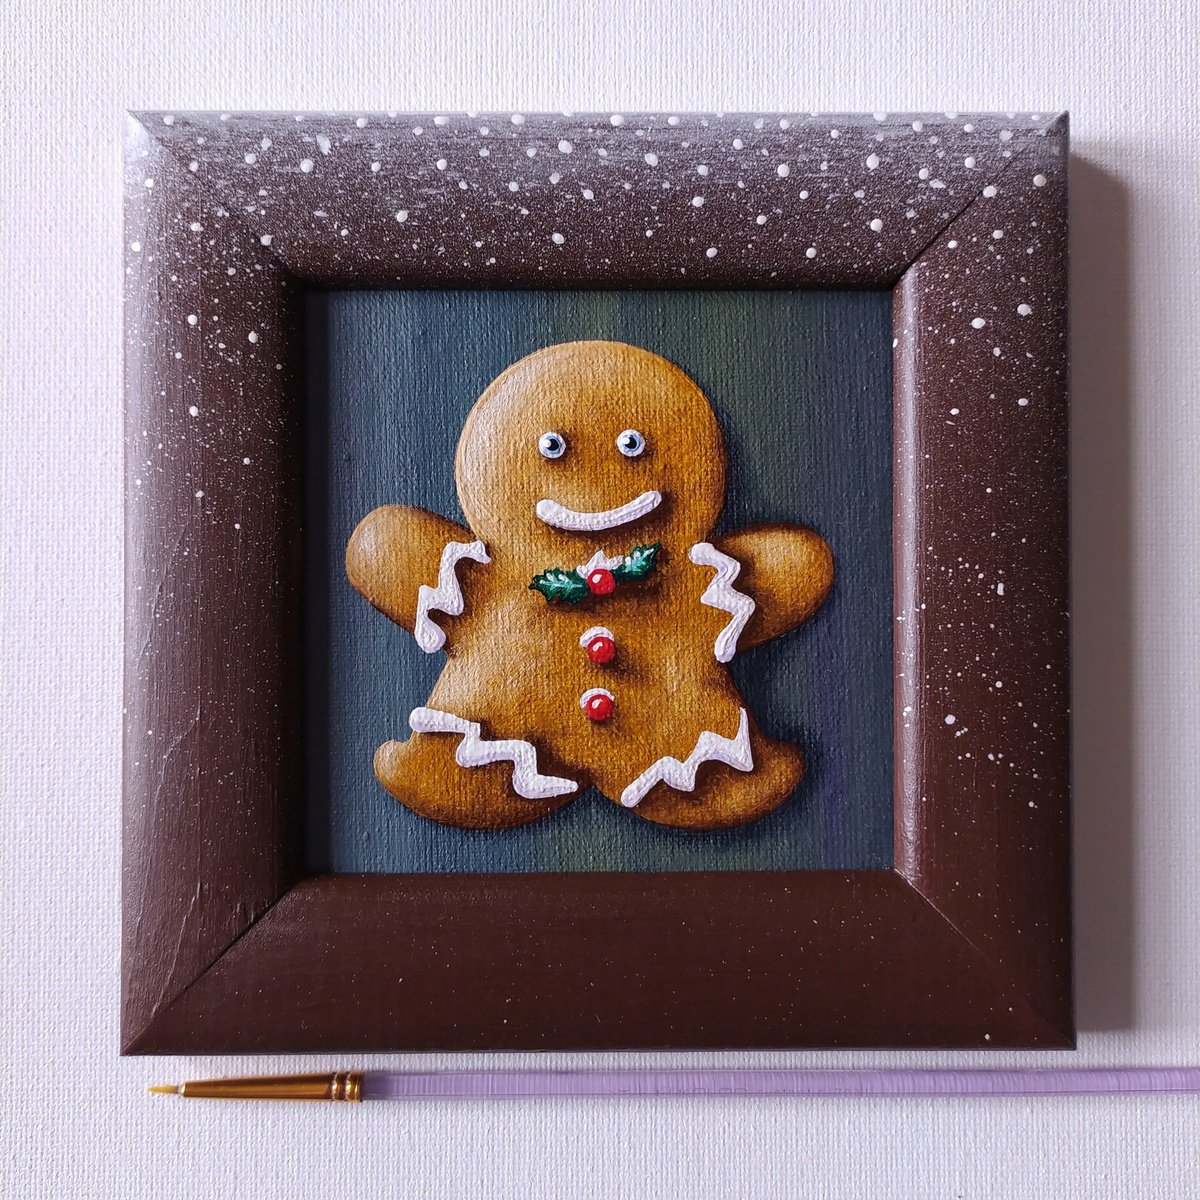 Gingerbread man by Anna Shabalova